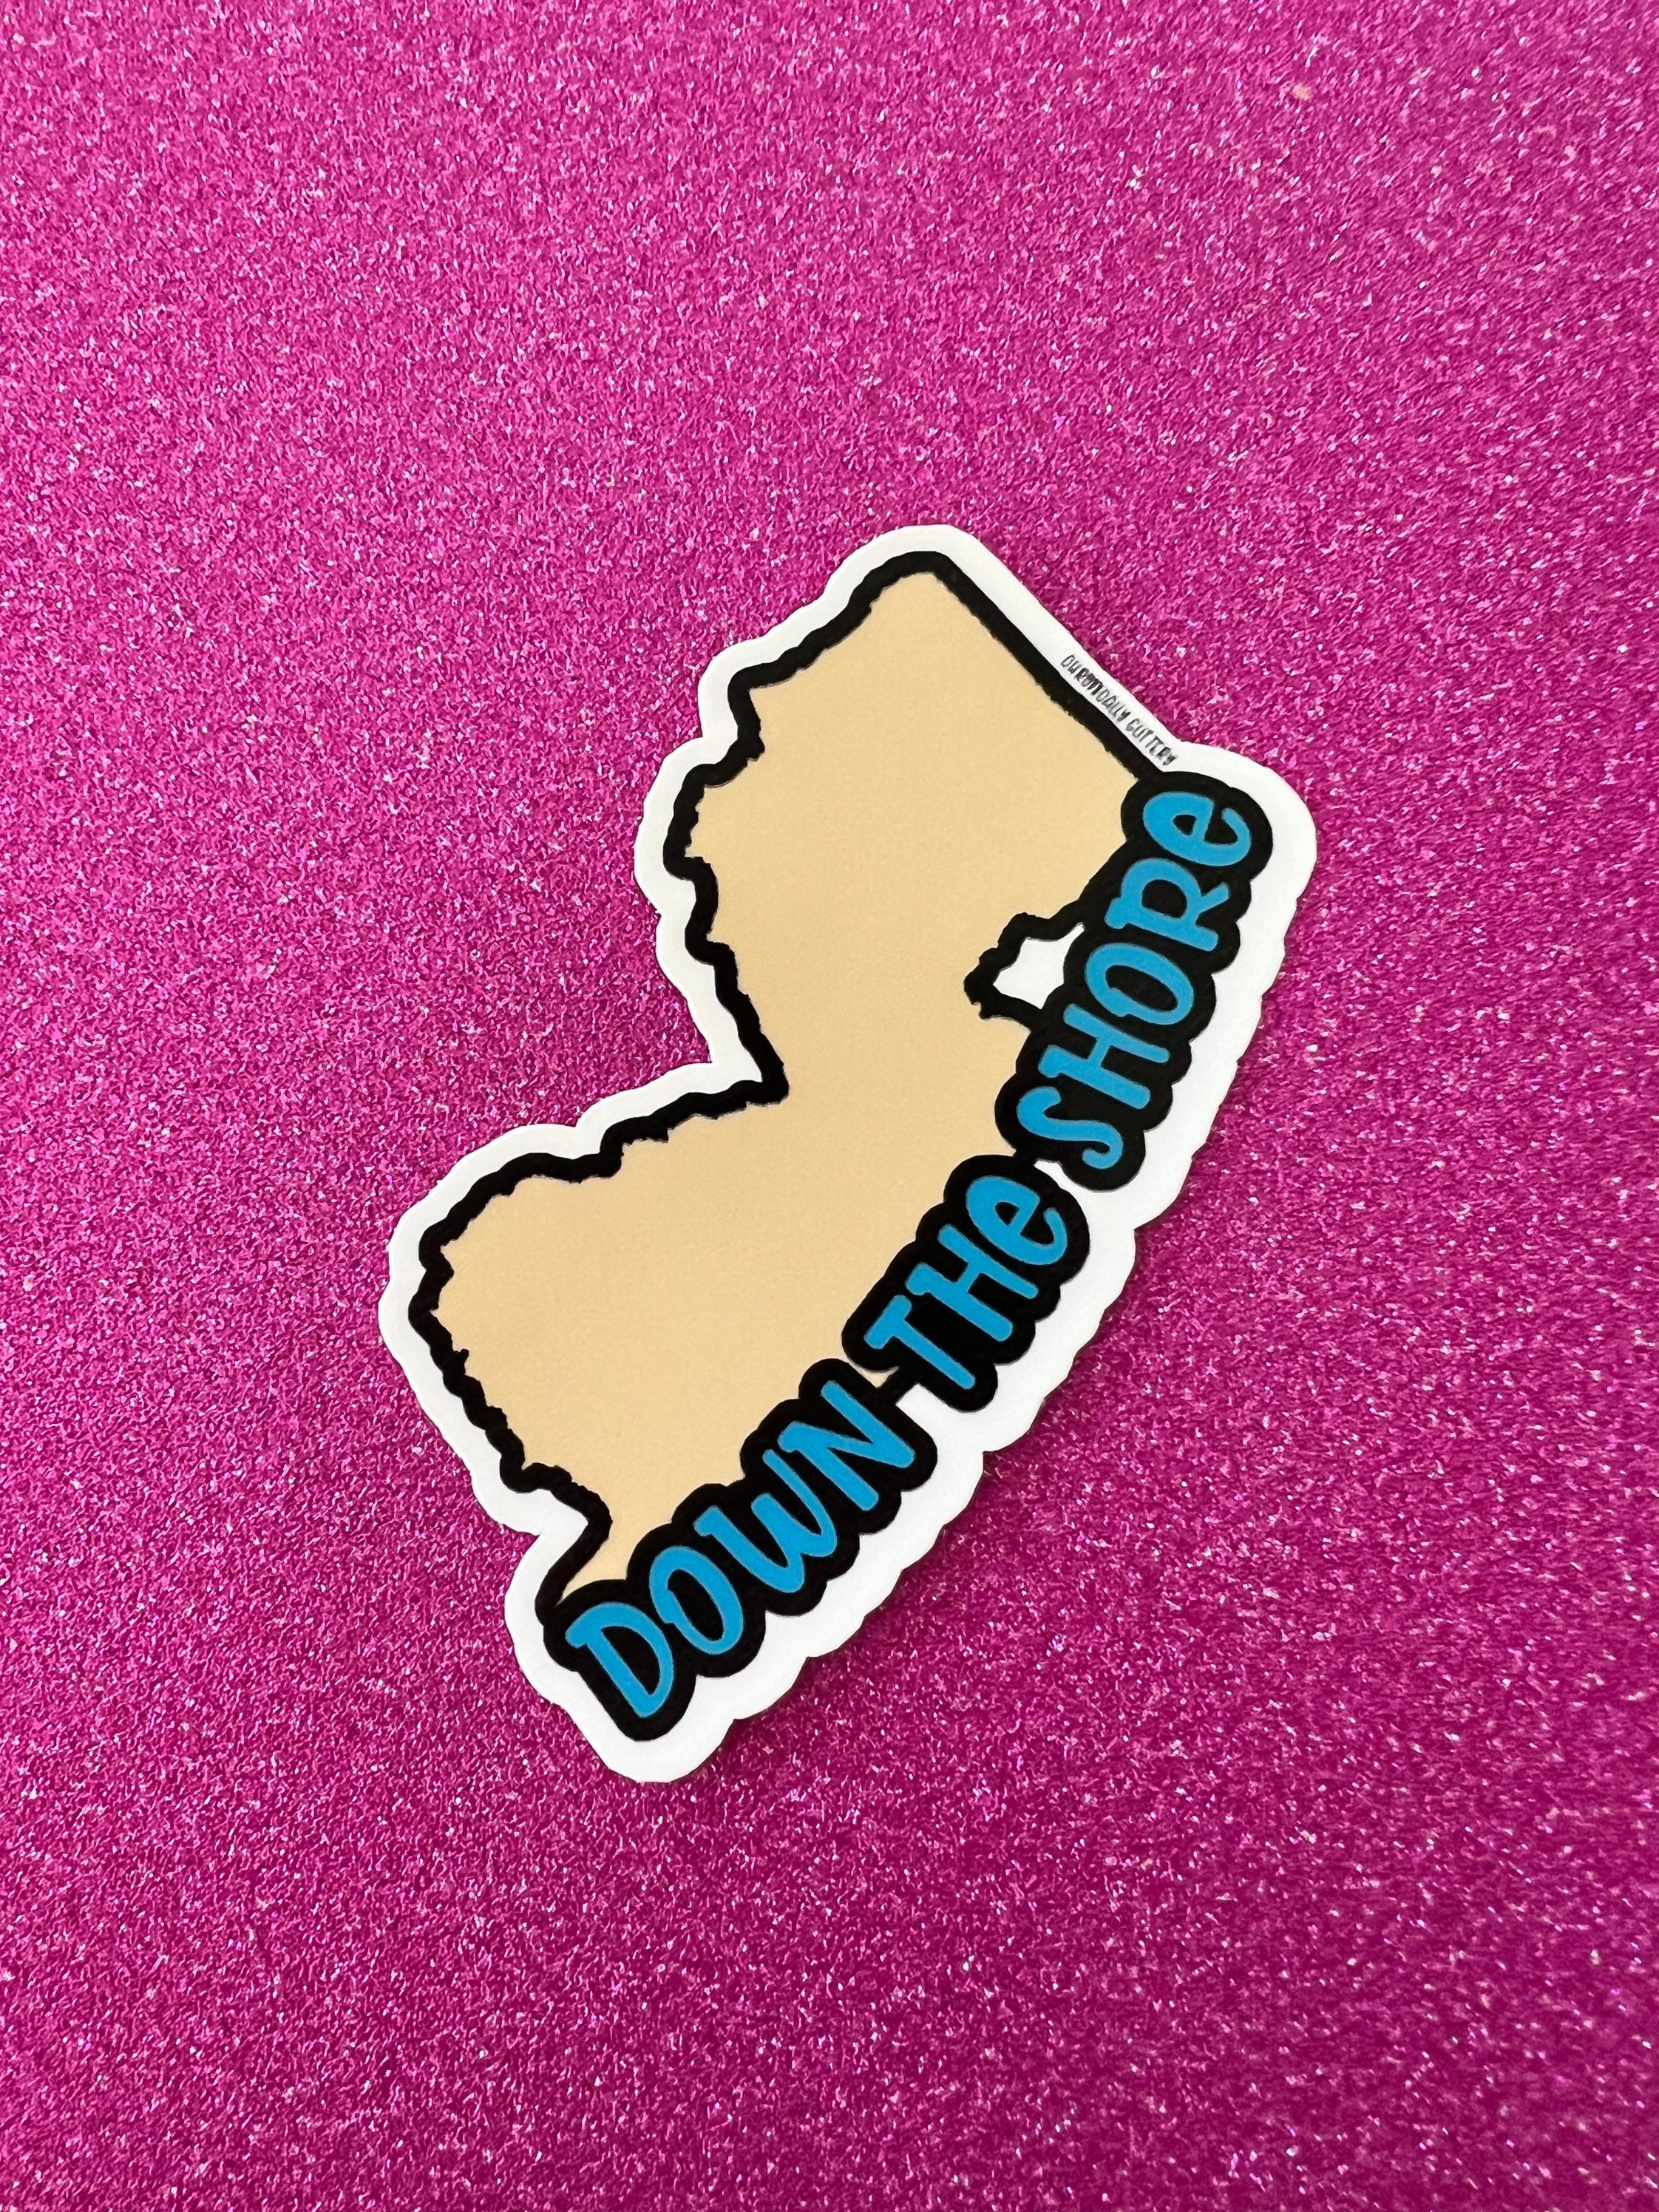 New Jersey Sticker 